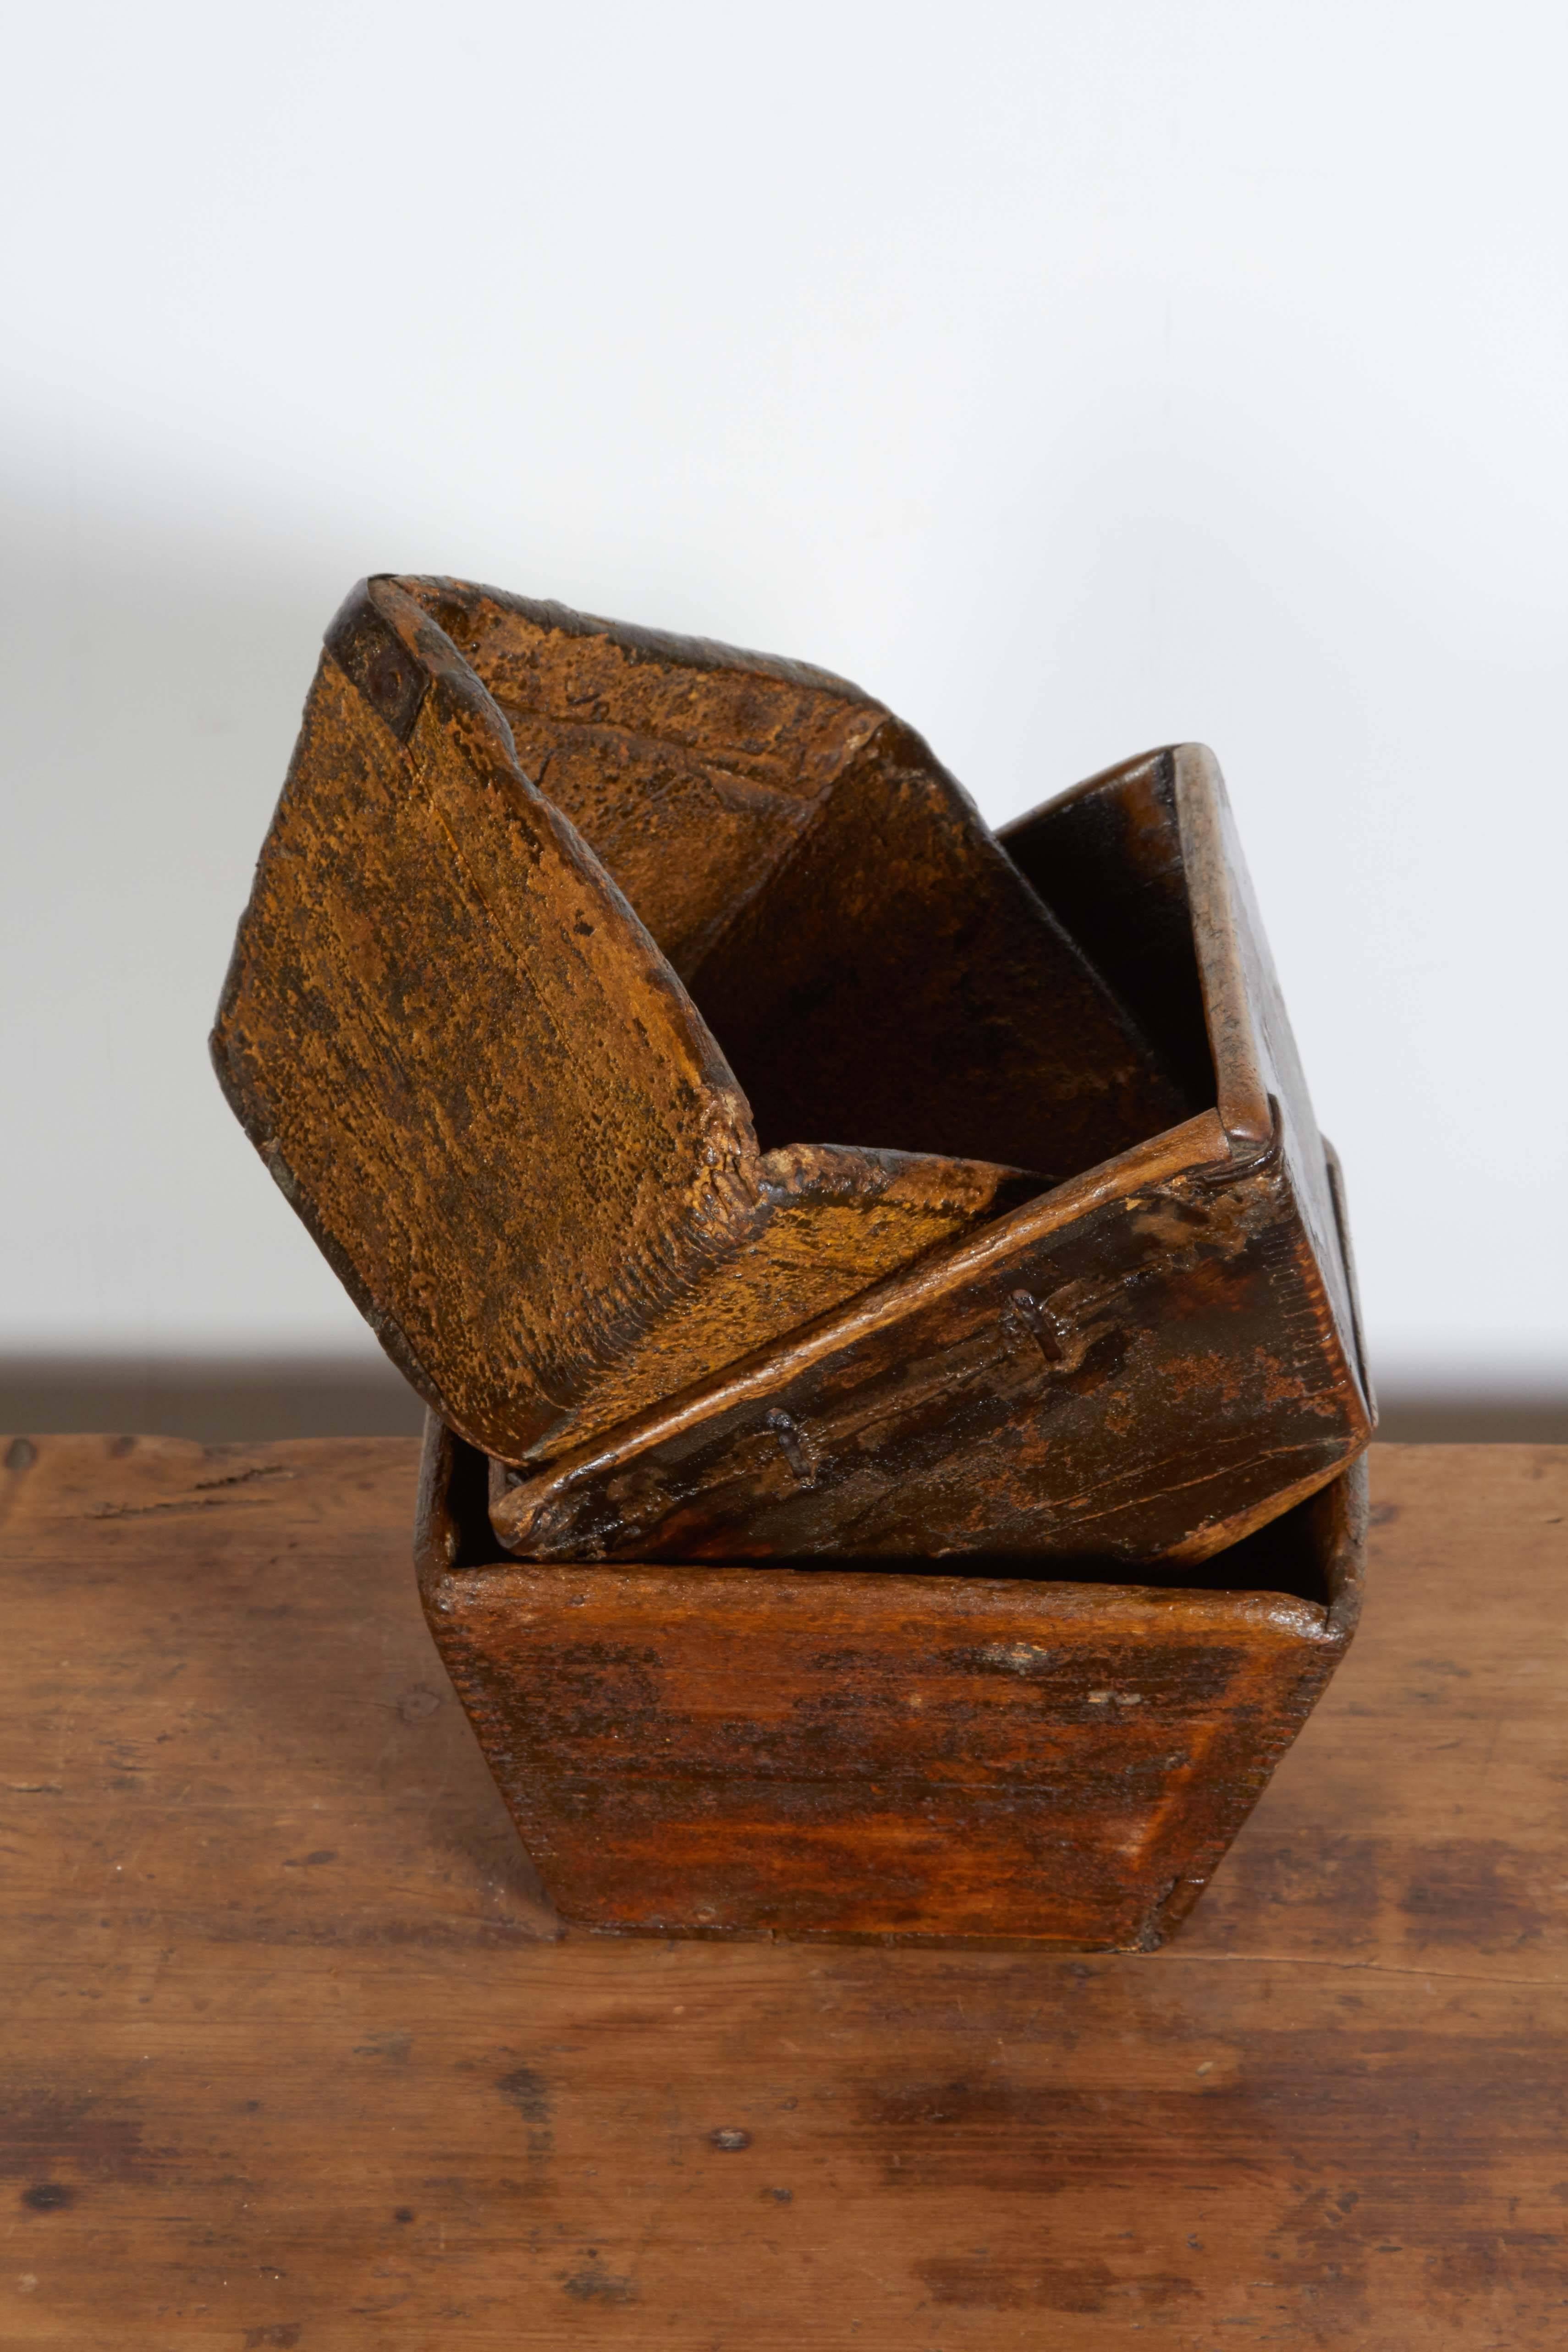 antique wooden grain measures